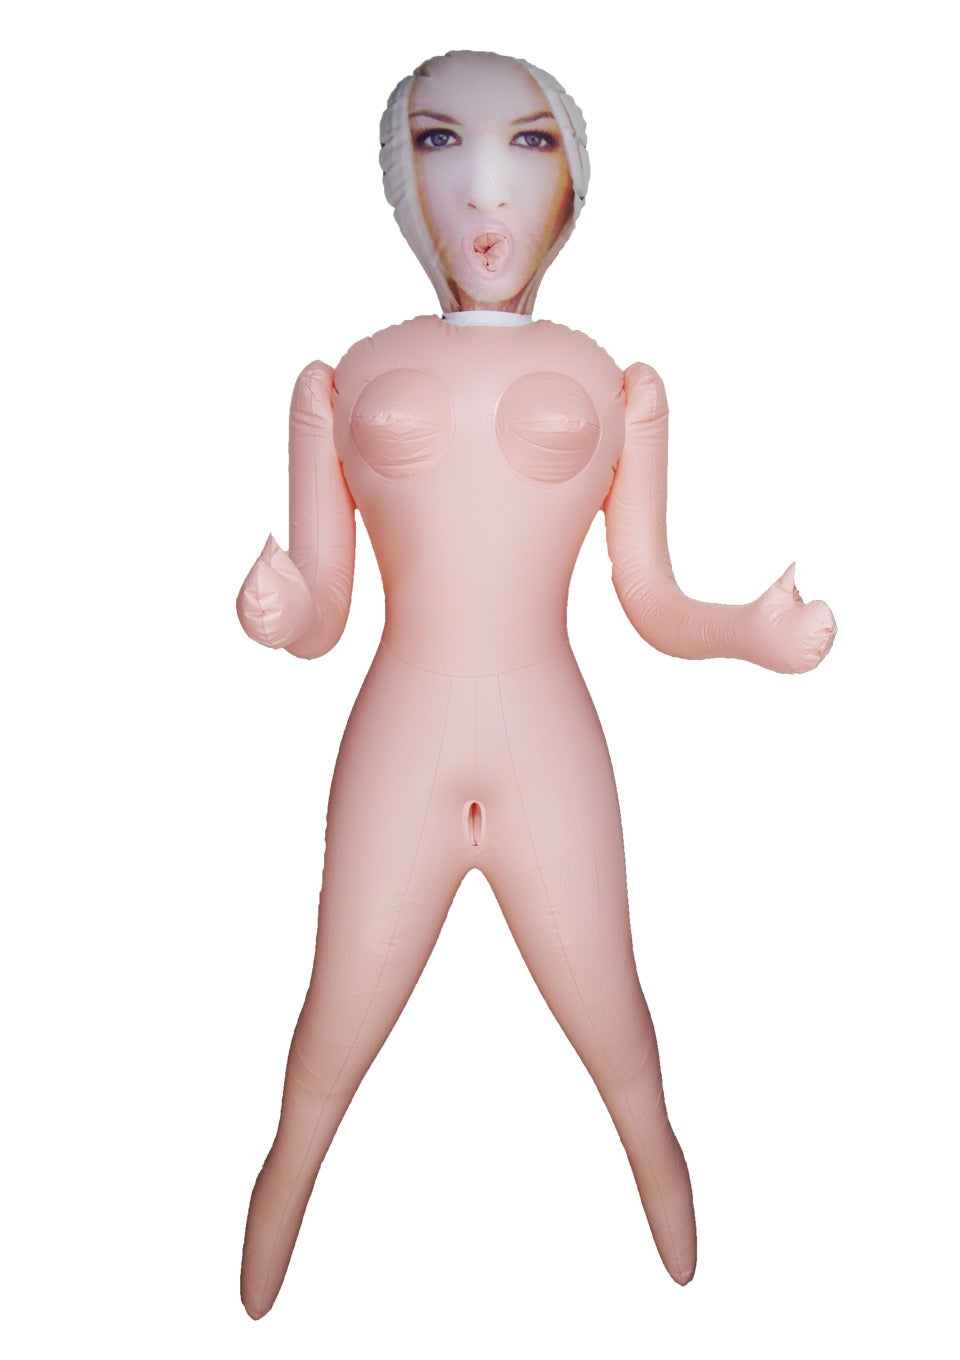 Bossoftoys - Monika love doll - 150 cm - Blowup doll - Triple holes - Masturbator - Inflatable doll - 26-00011